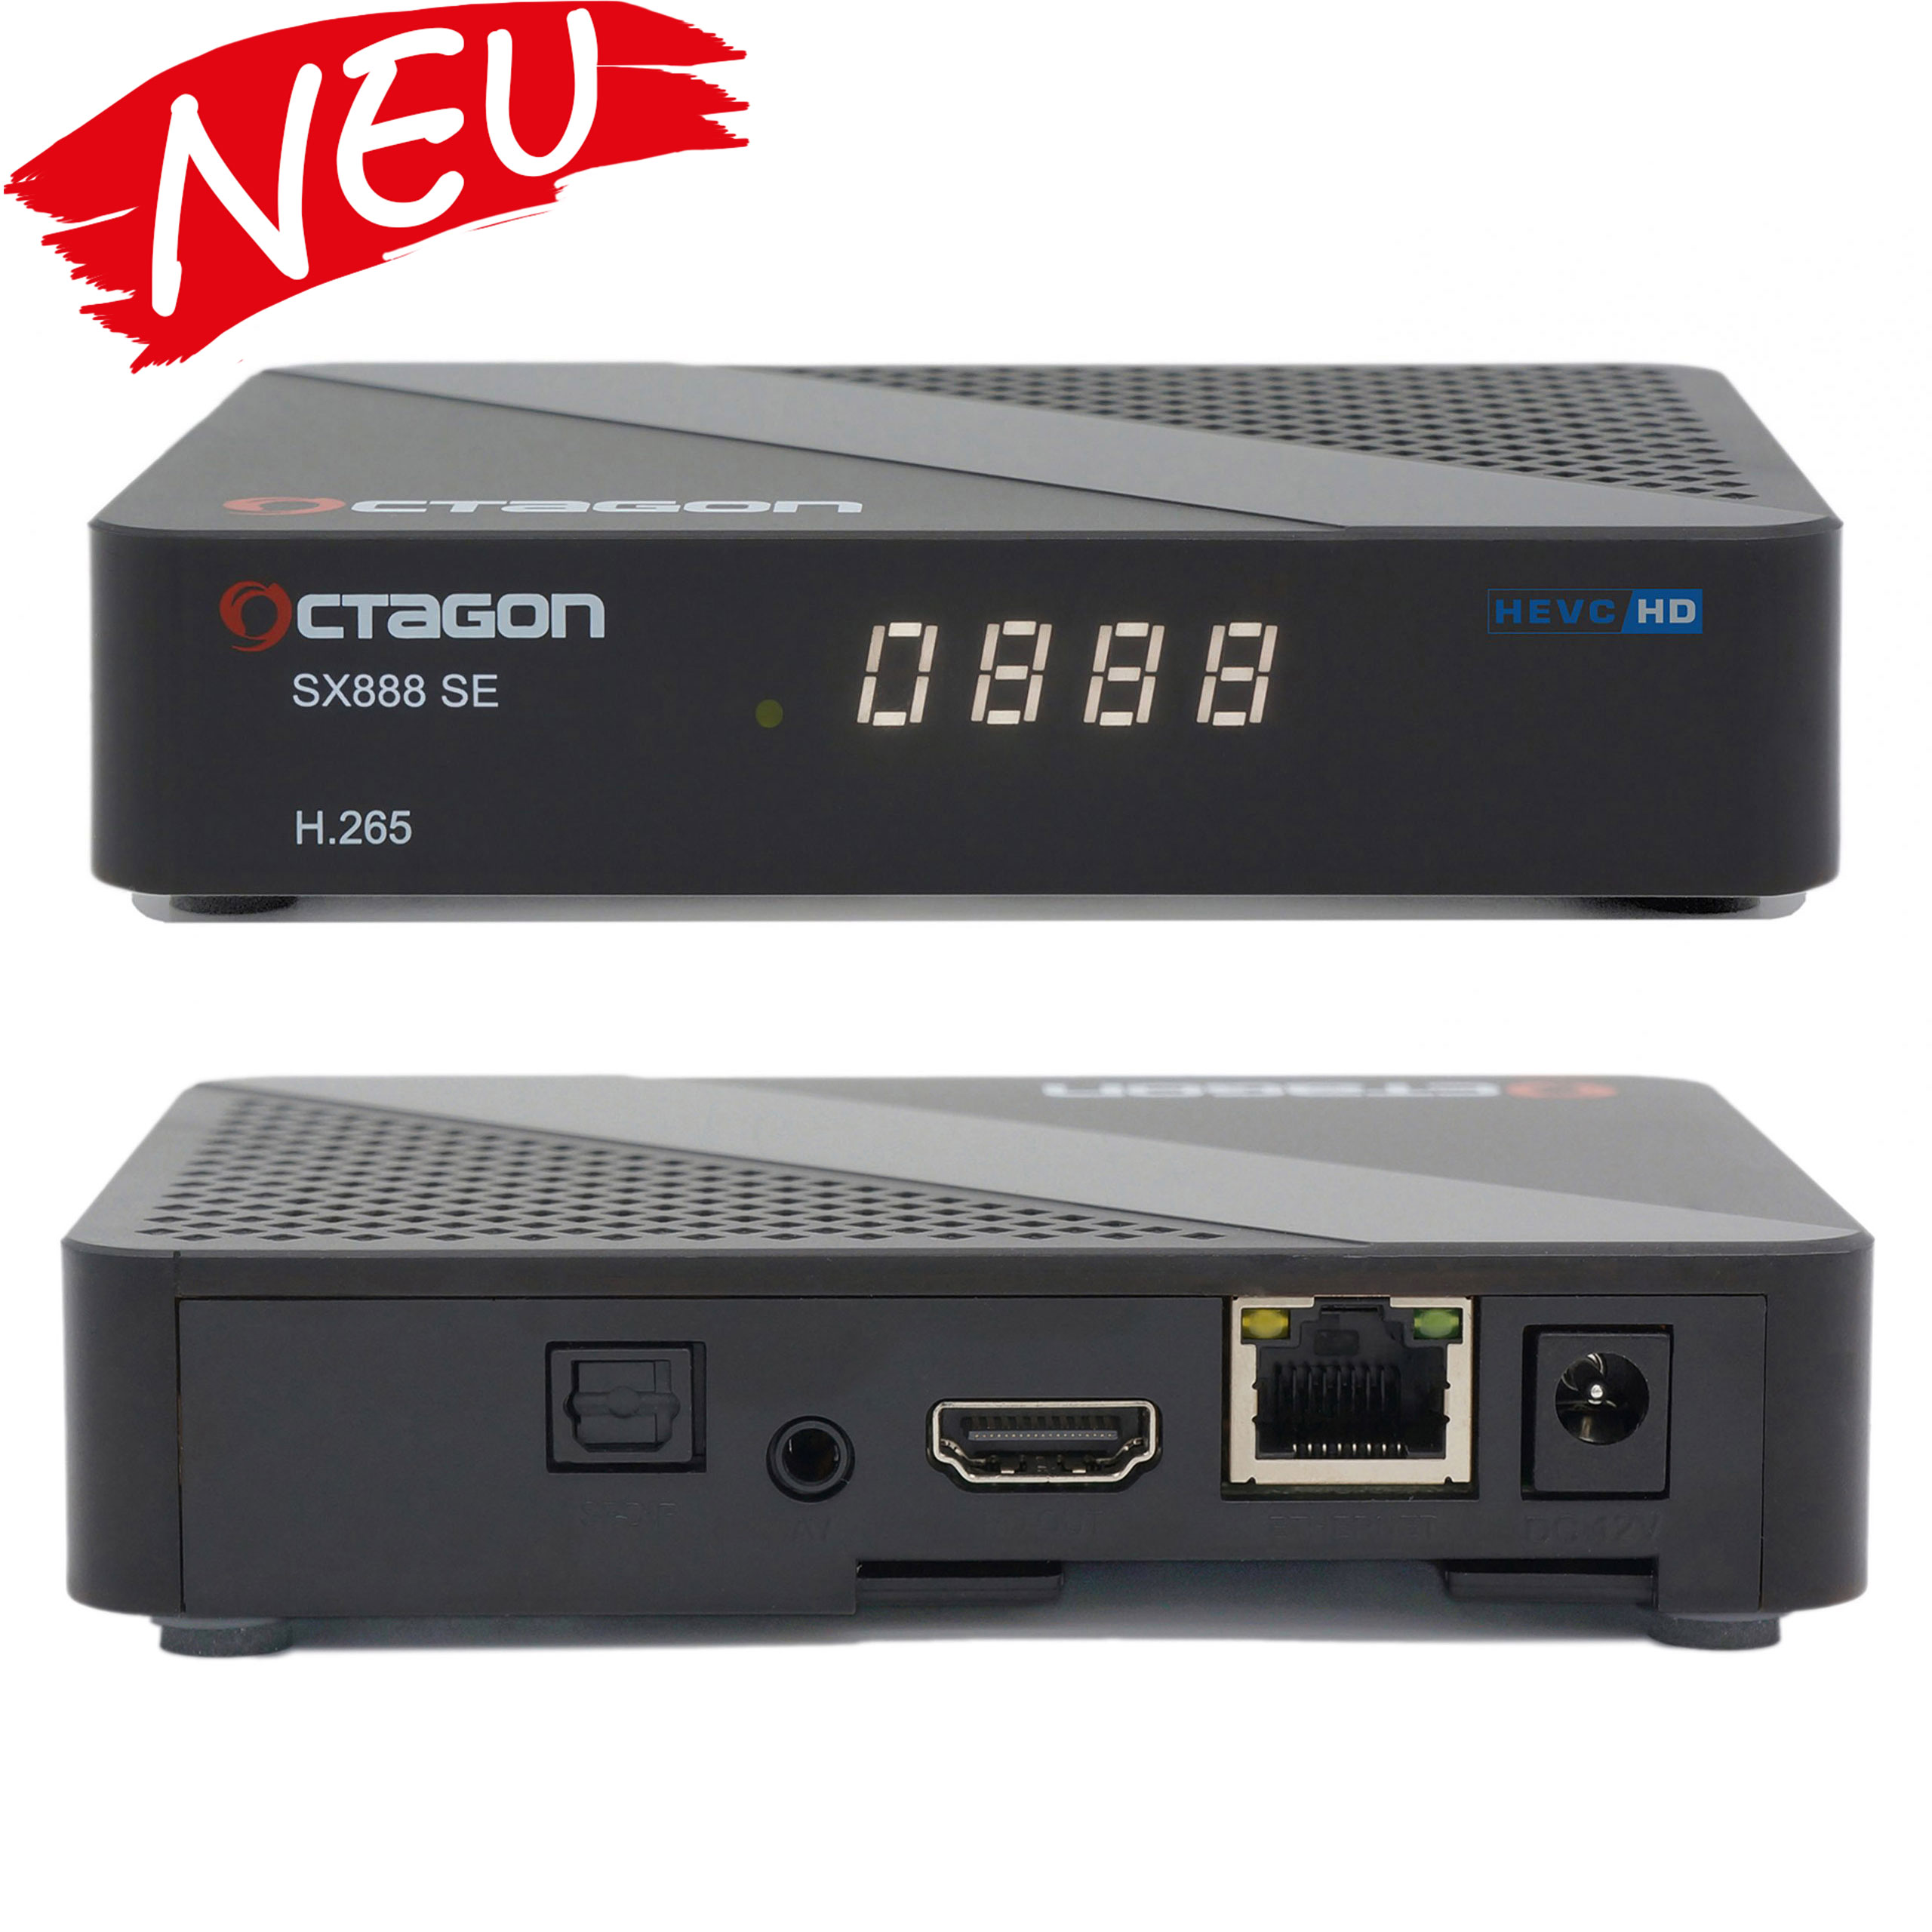 OCTAGON SX888 SE V2 HD H.265 IP Receiver